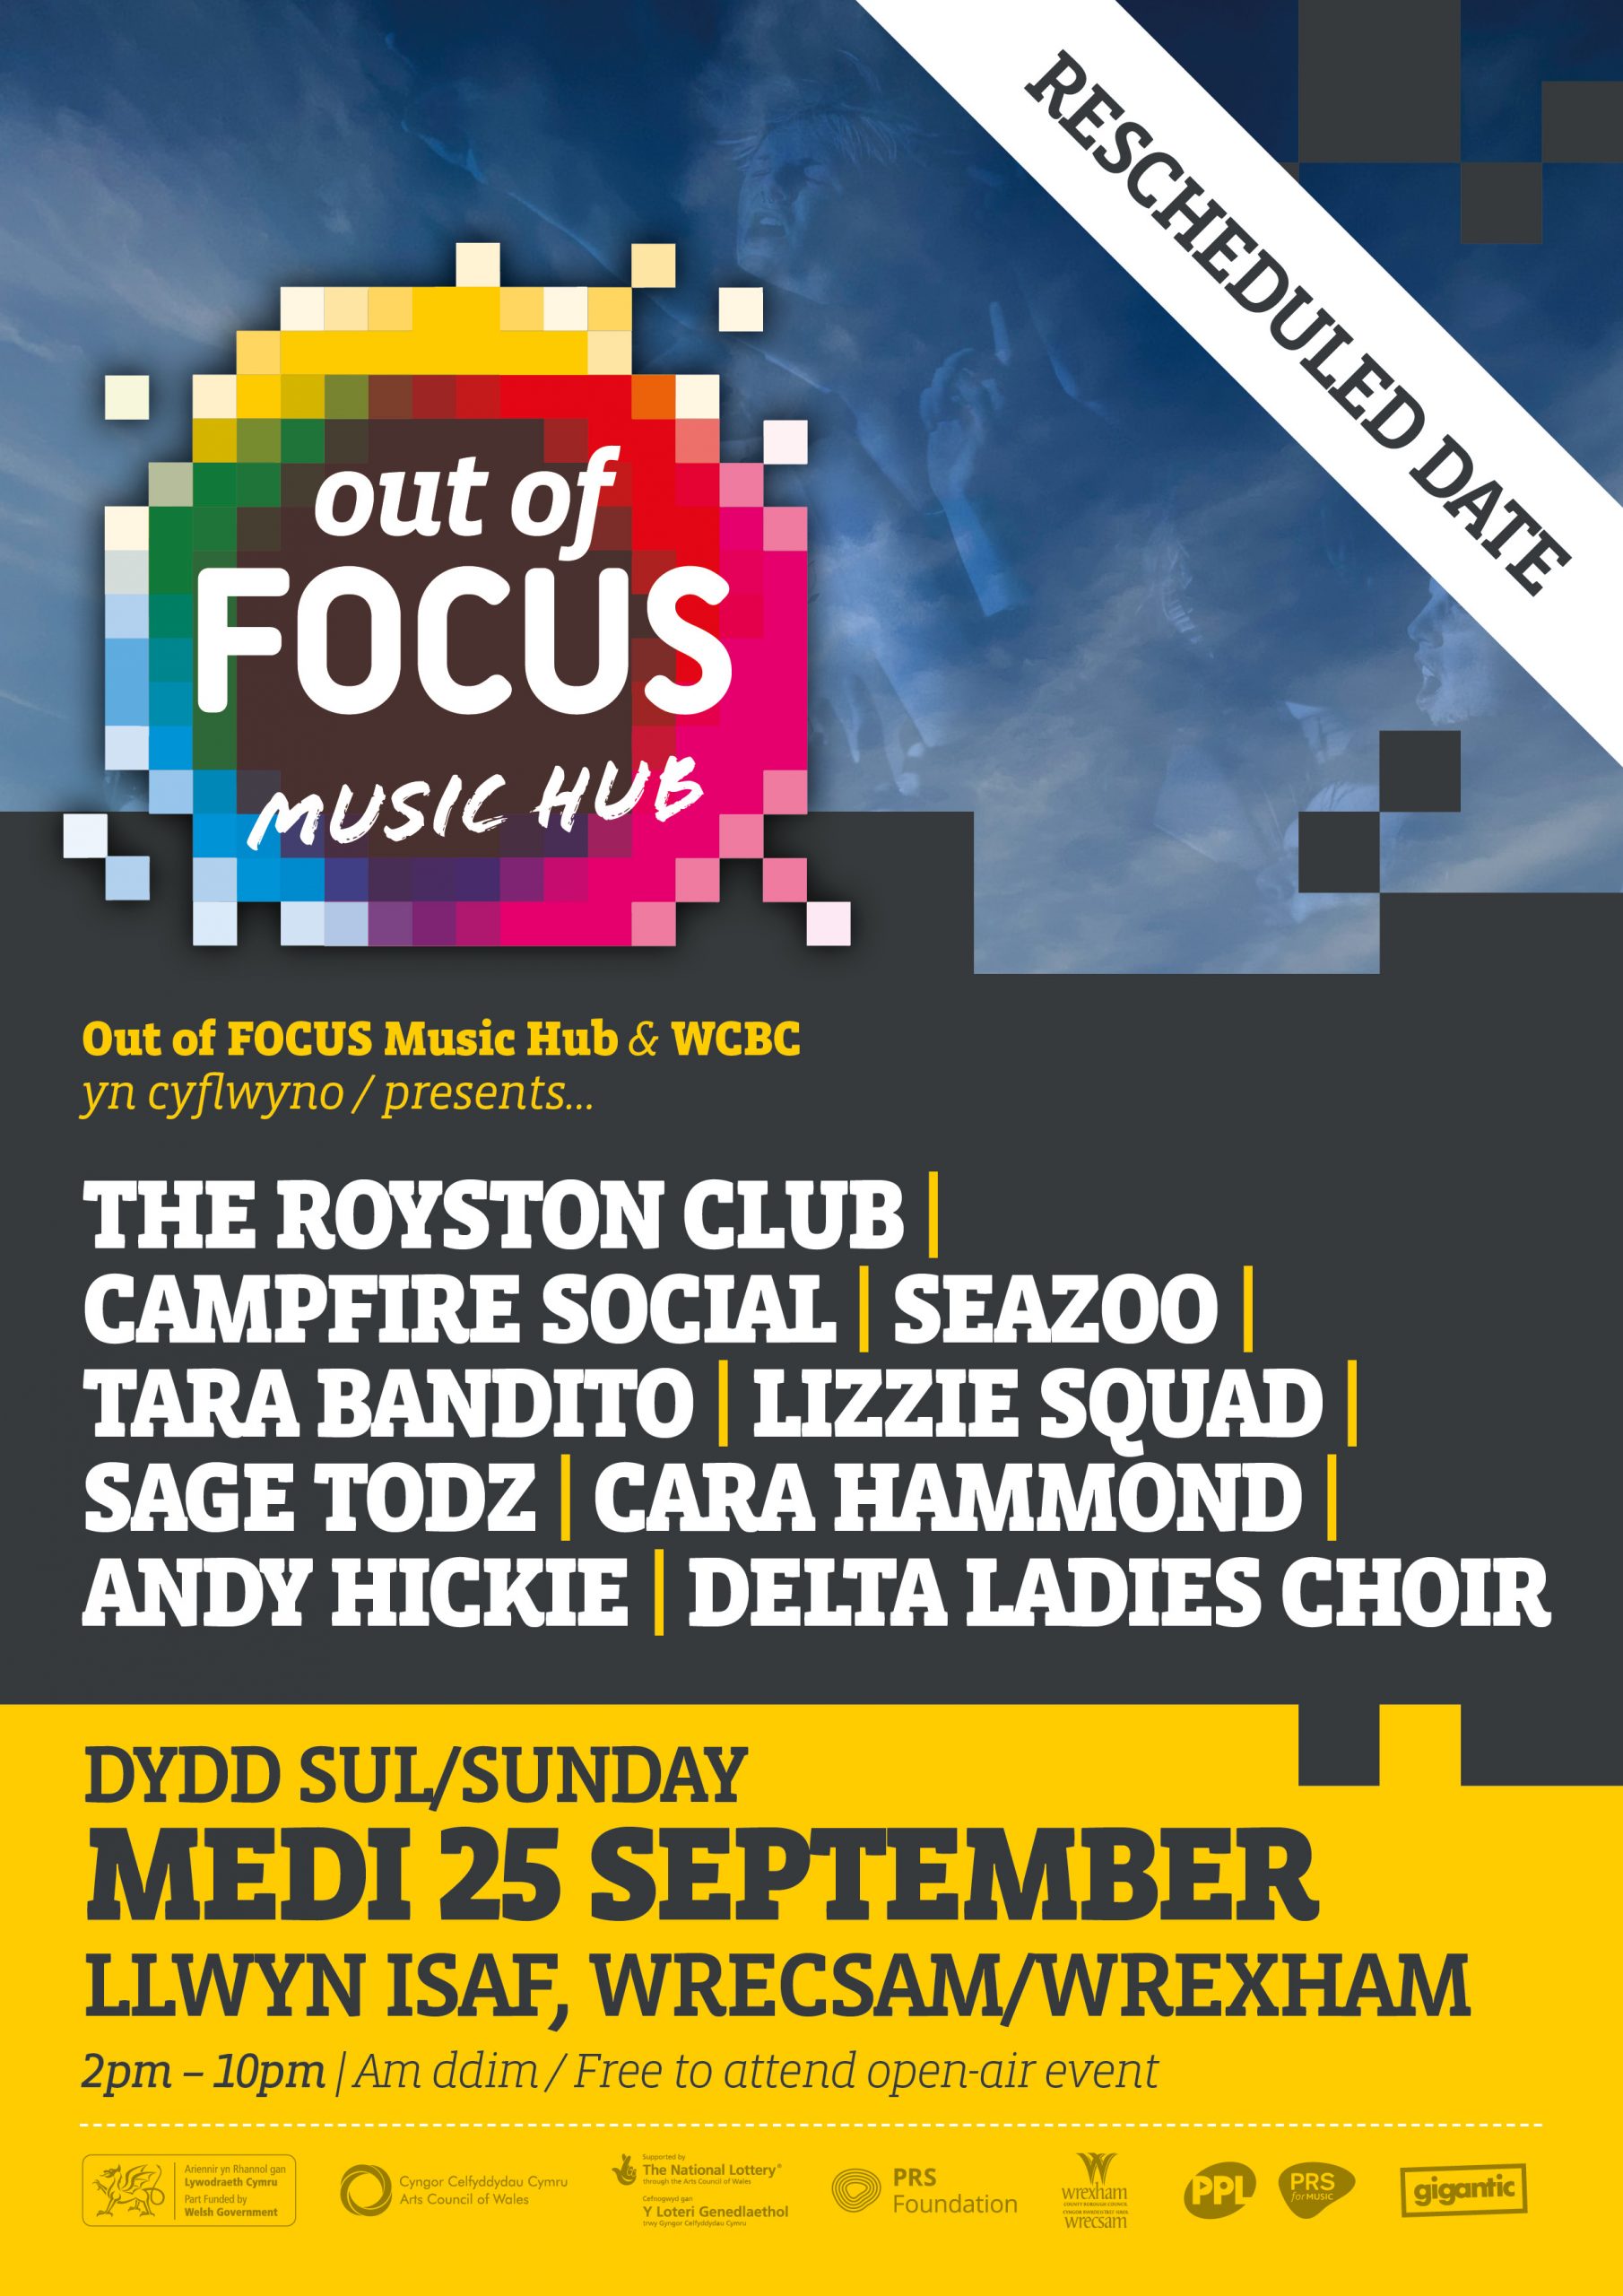 Fantastic music event lined up for Sunday 25 September!